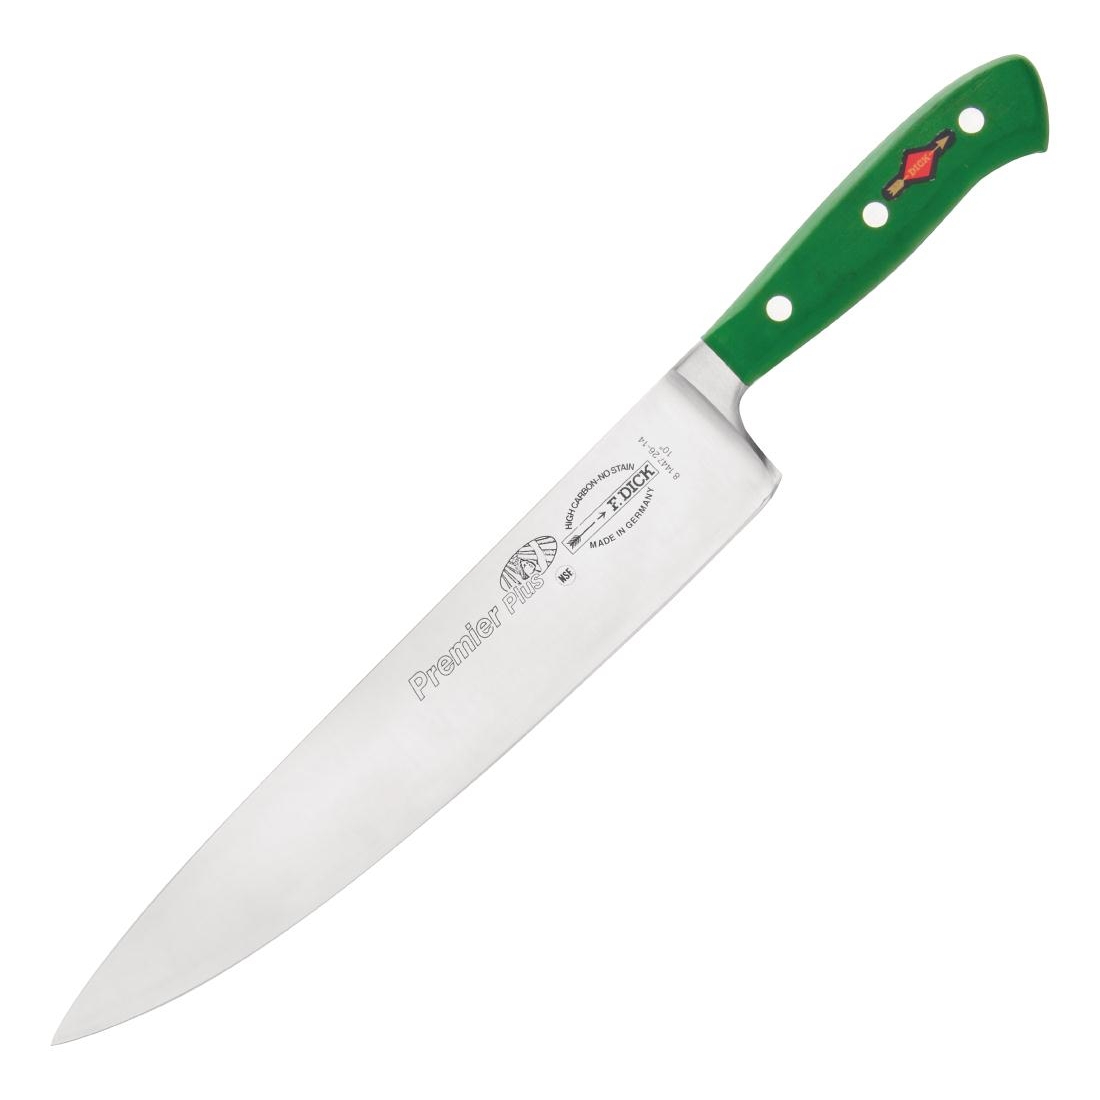 Dick Premier Plus HACCP Chefs Knife Green 25.5cm